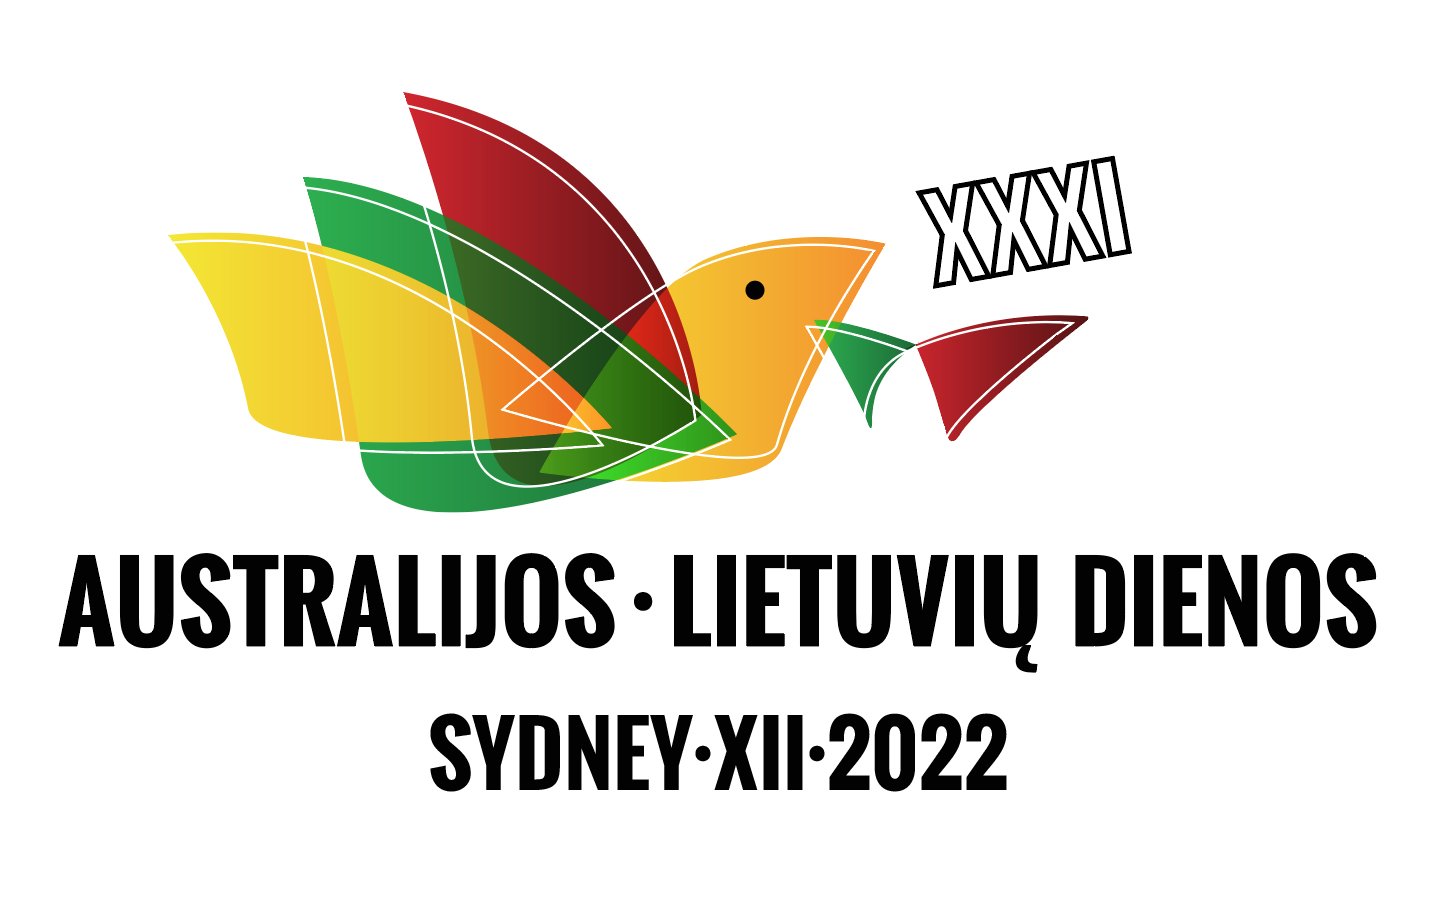 Logo design for the Australian Lithuanian Days XXXI  held in Sydney